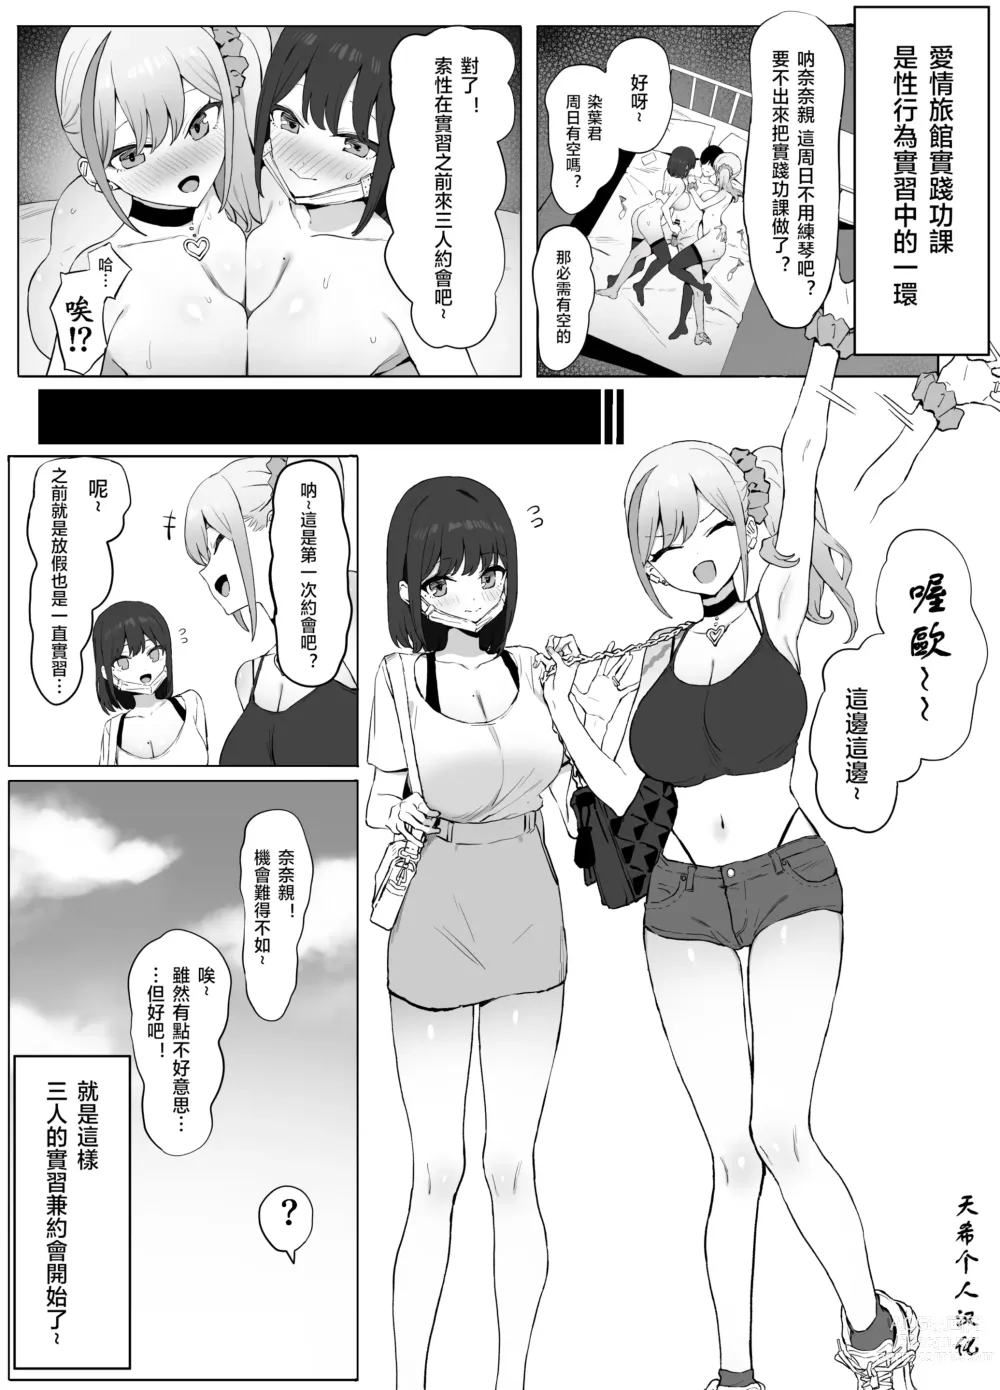 Page 2 of doujinshi 过性行为2